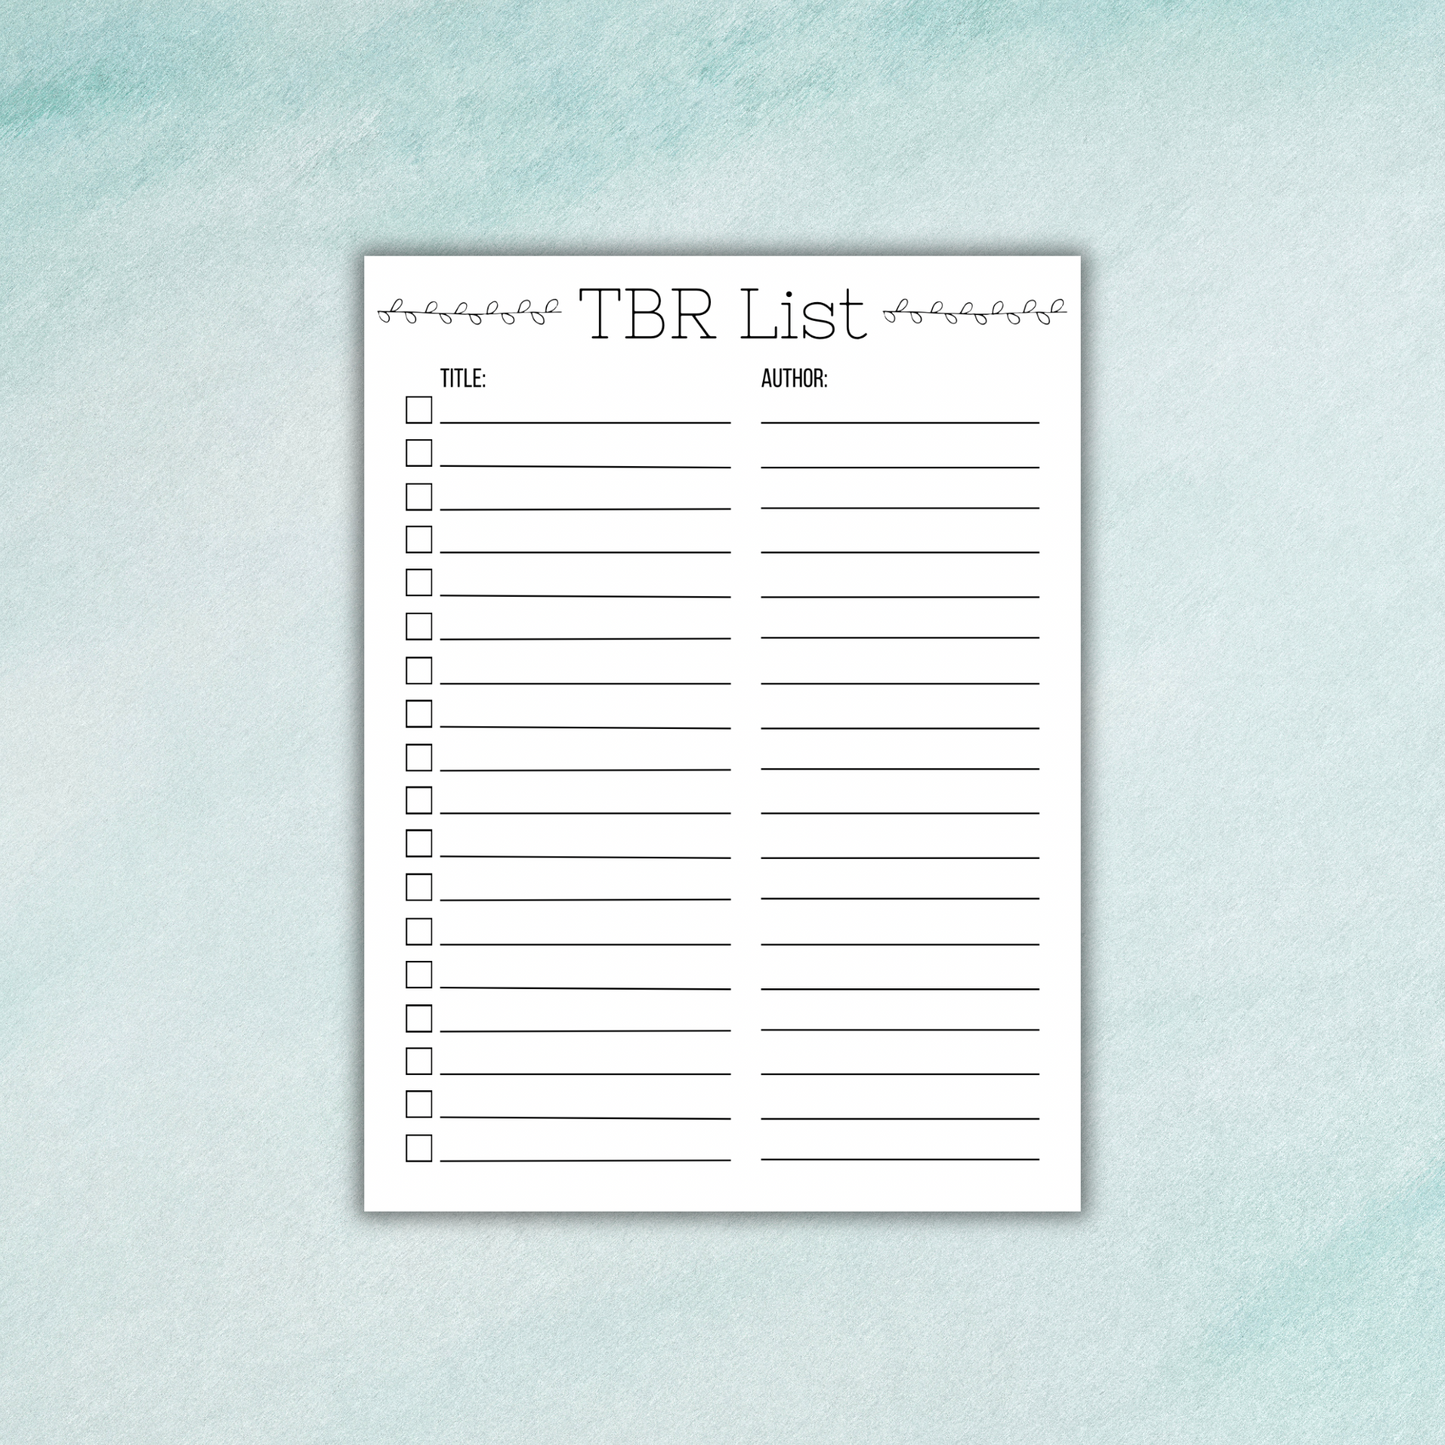 TBR (To Be Read) List Sticker Sheet